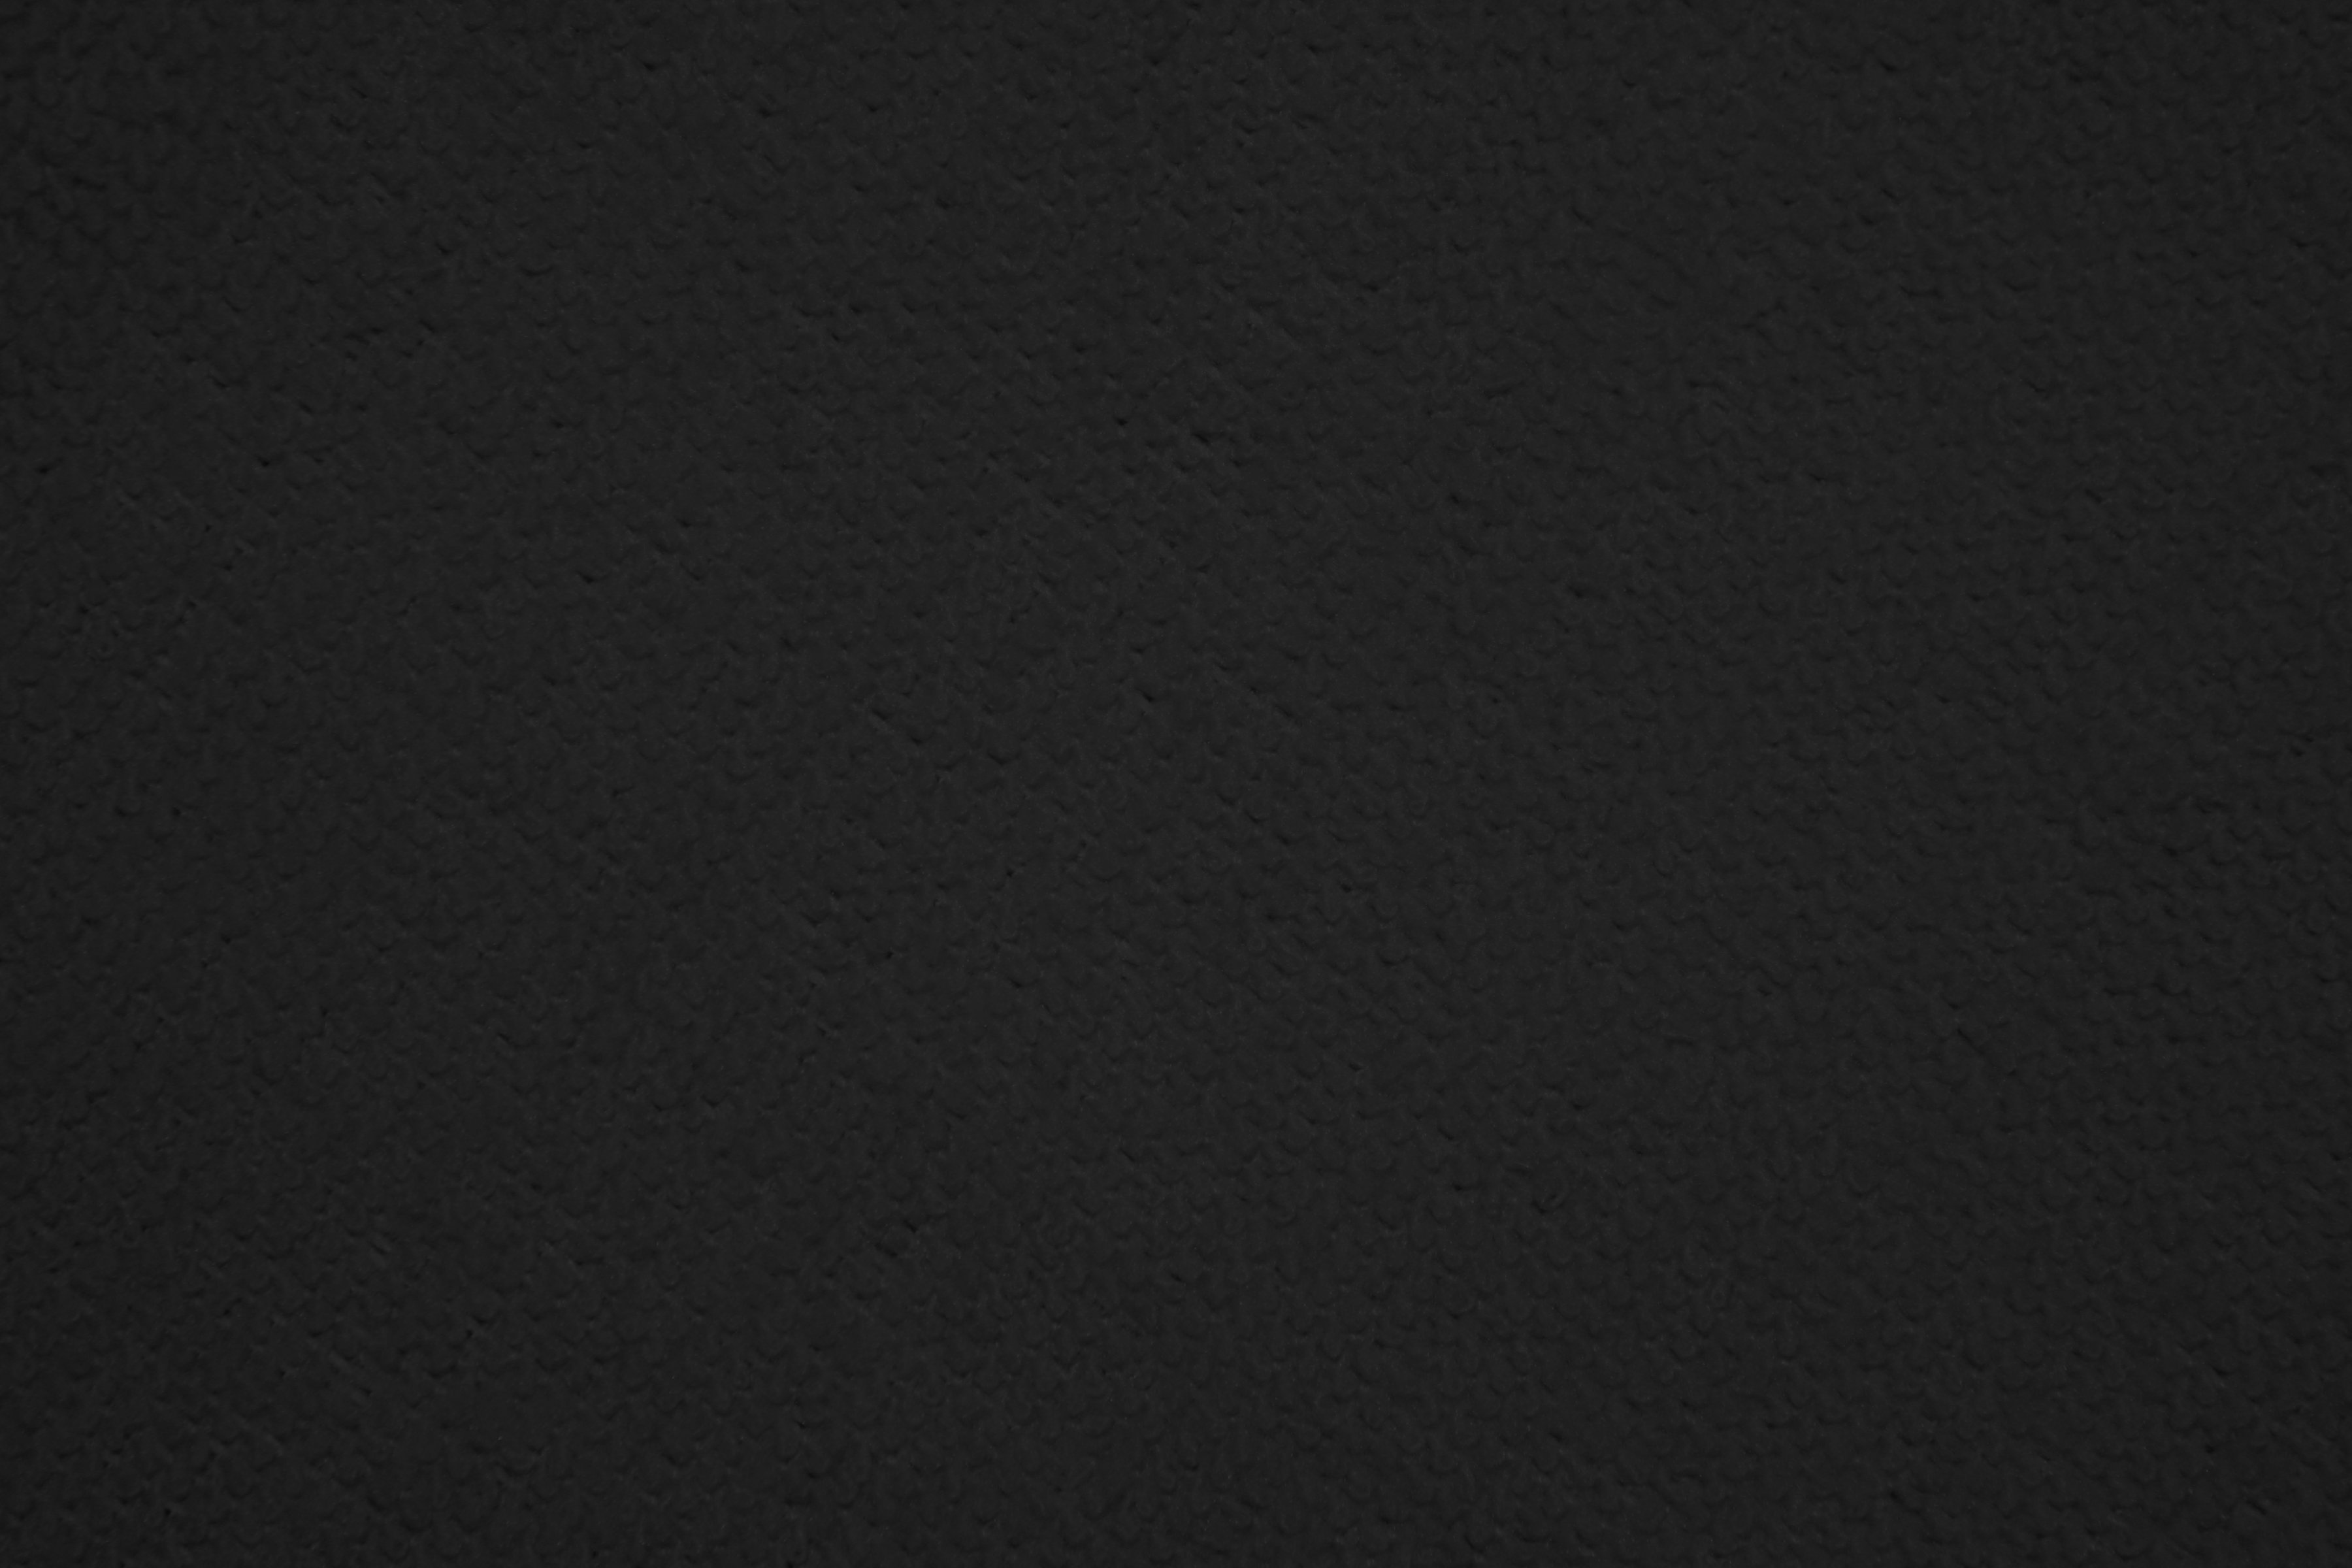 Black Microfiber Cloth Fabric Texture Picture | Free Photograph